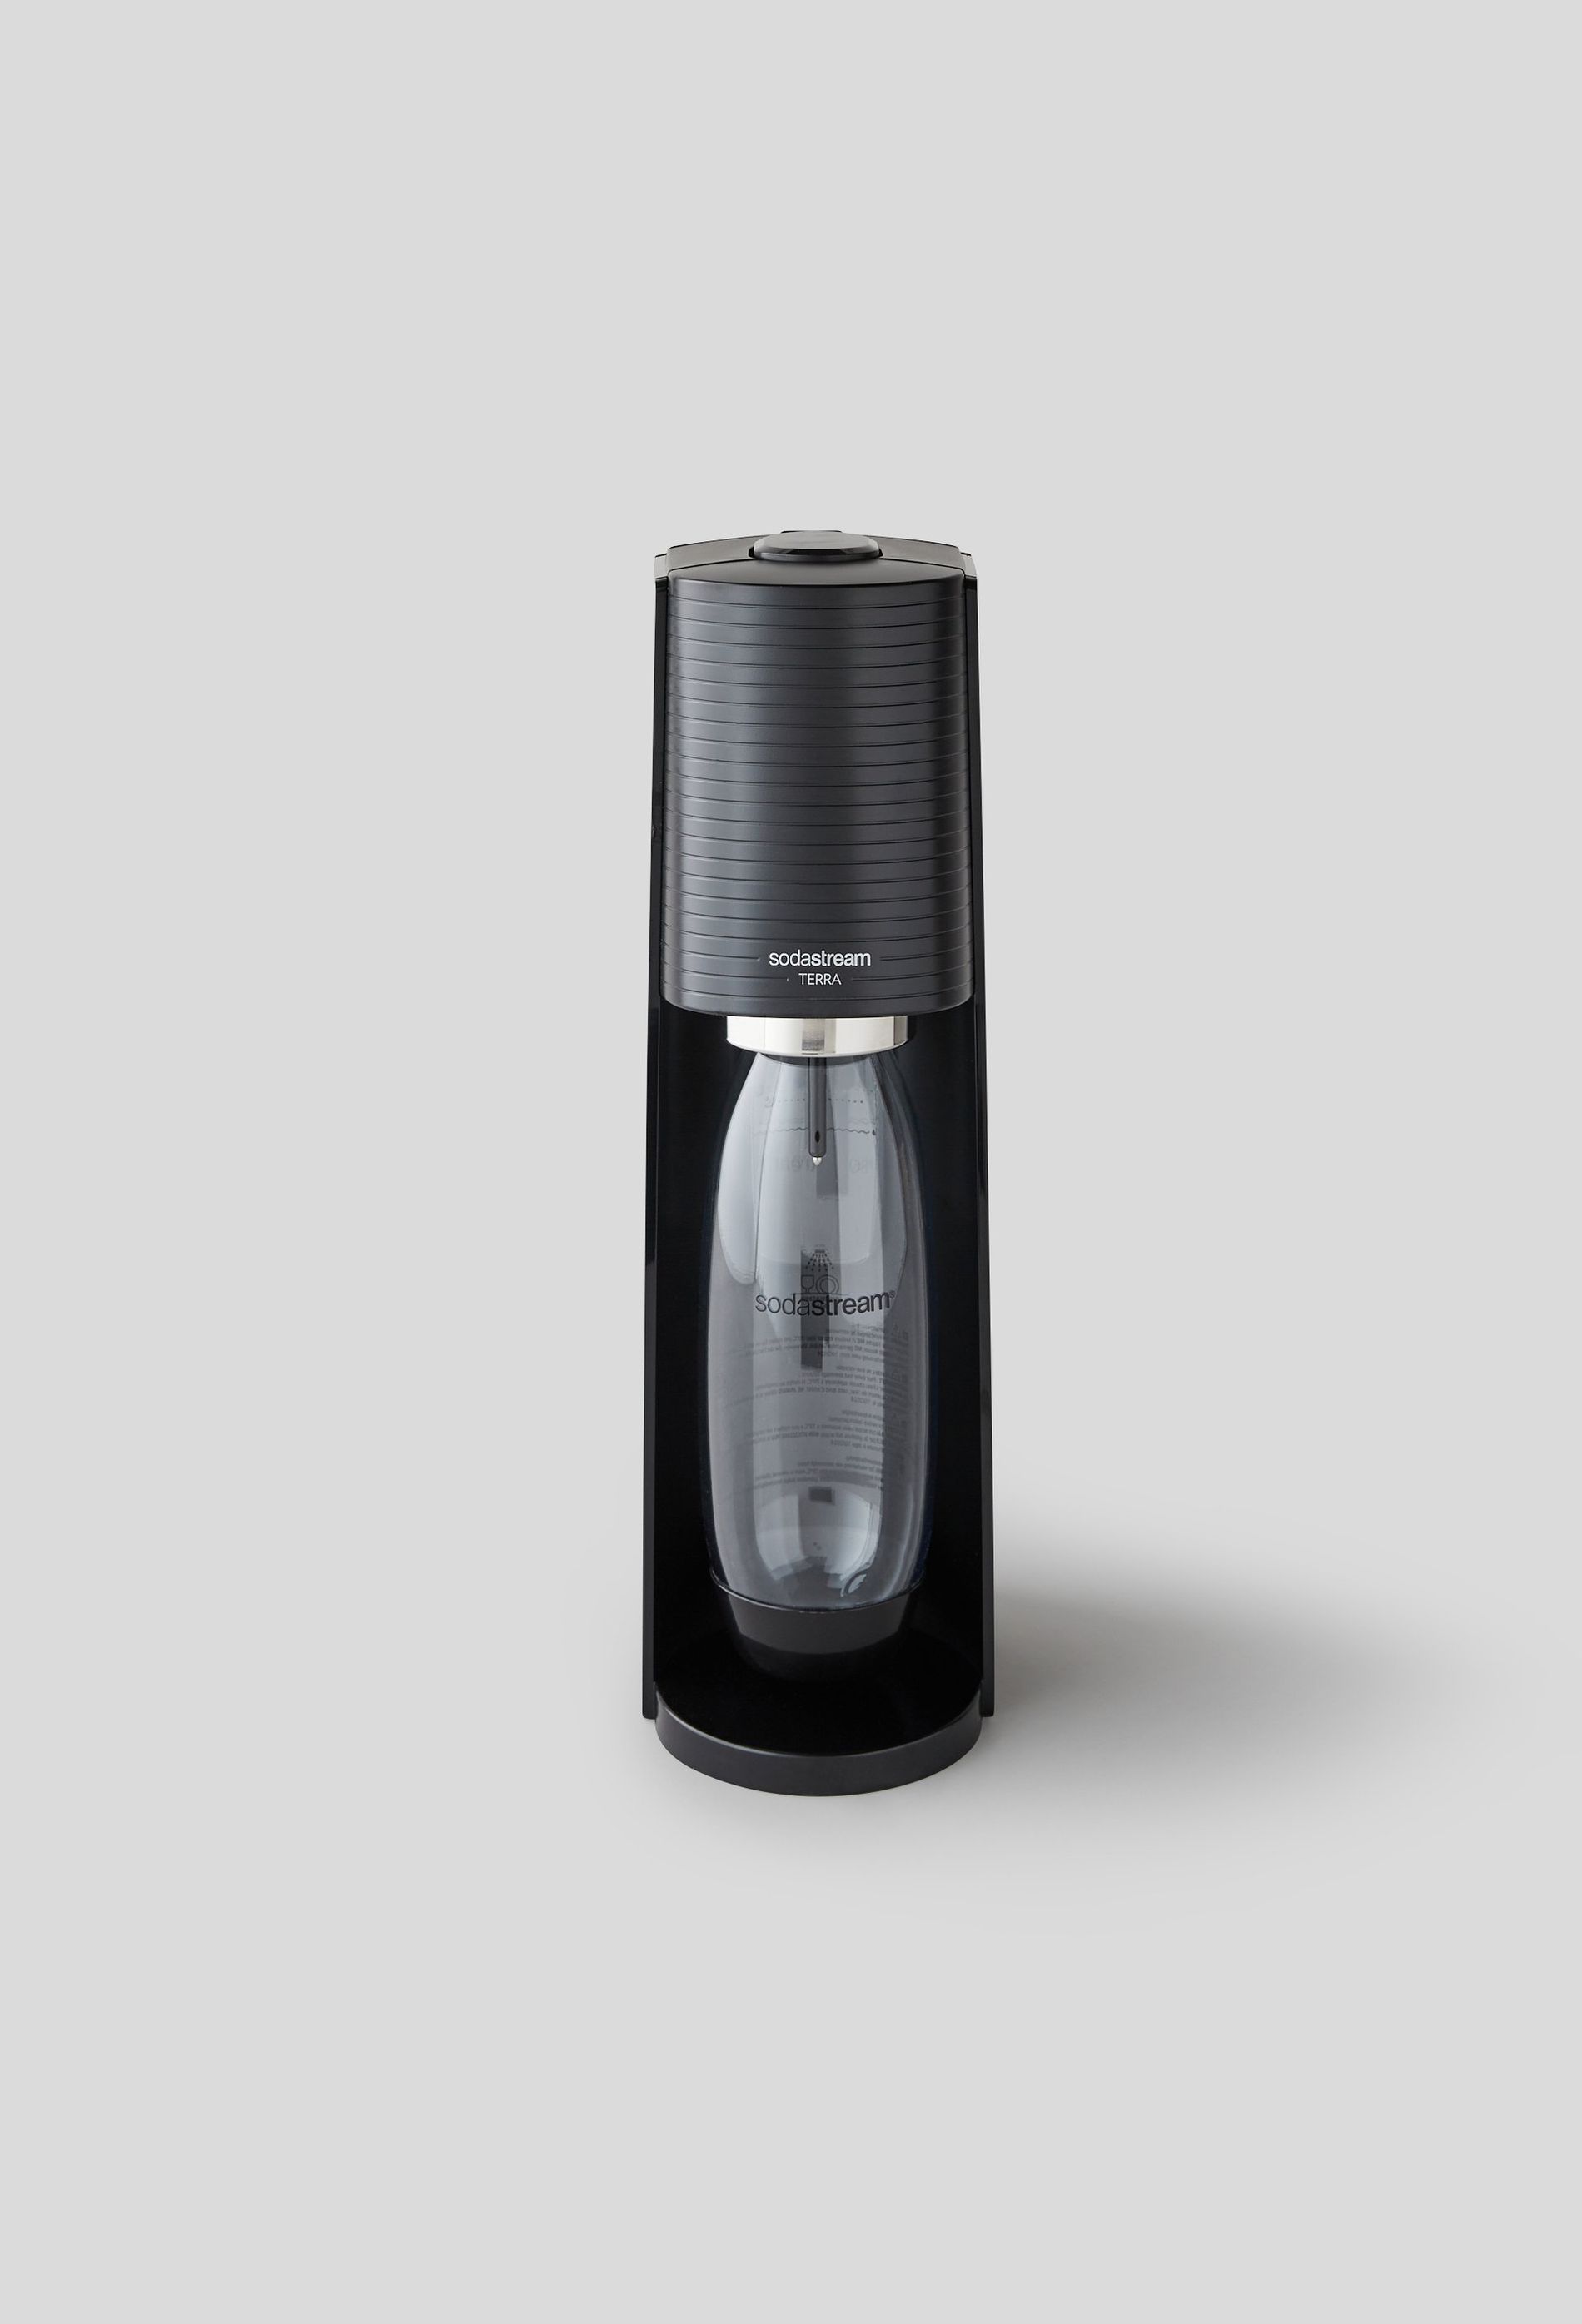 Promo Sodastream cylindre de gaz chez Monoprix